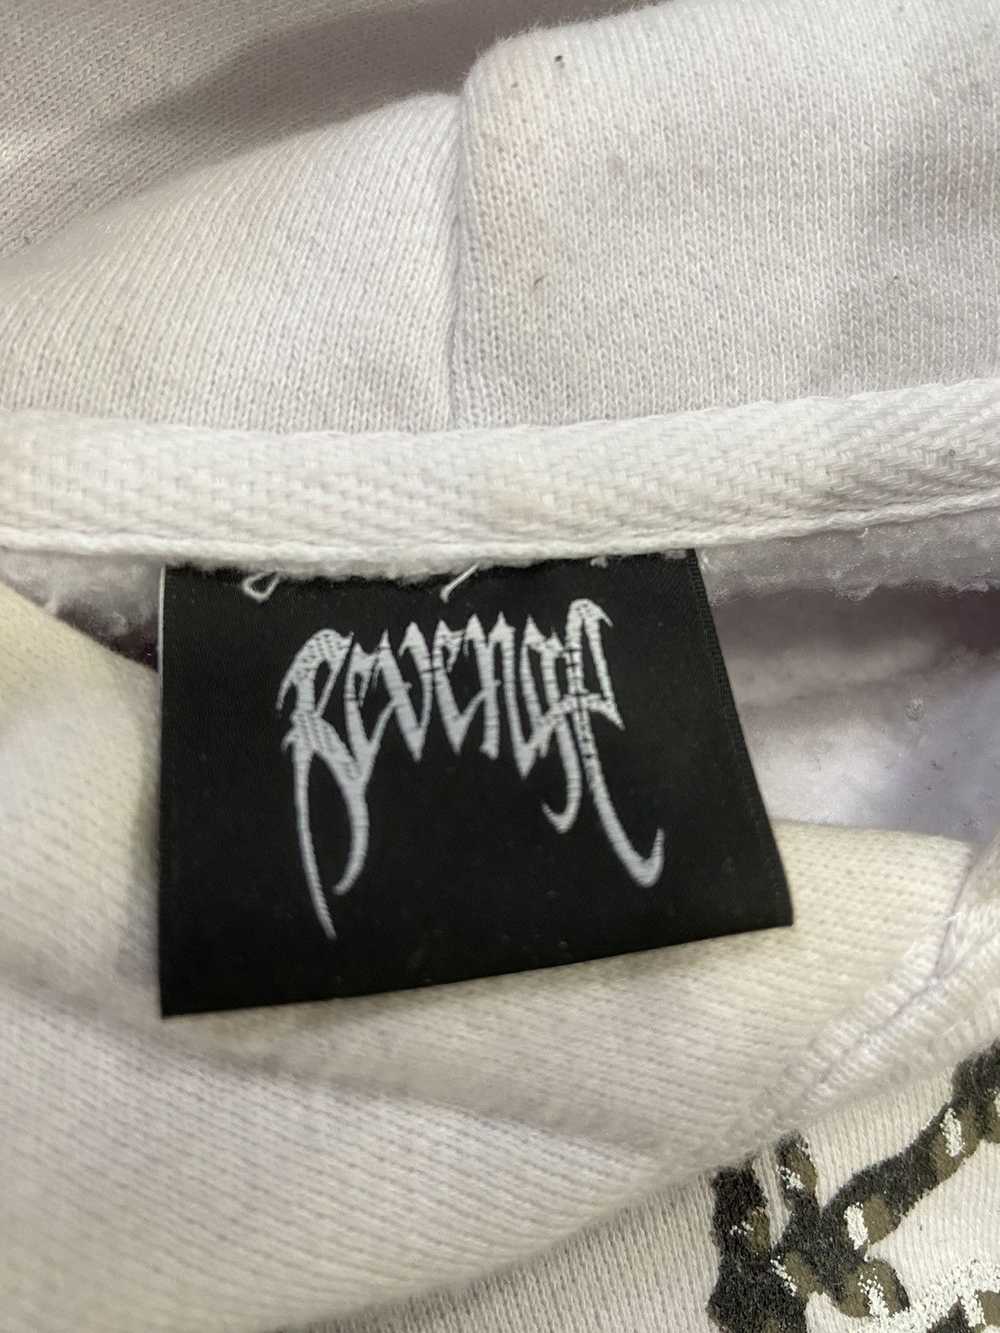 Revenge Revenge anarchy white hoodie - image 3